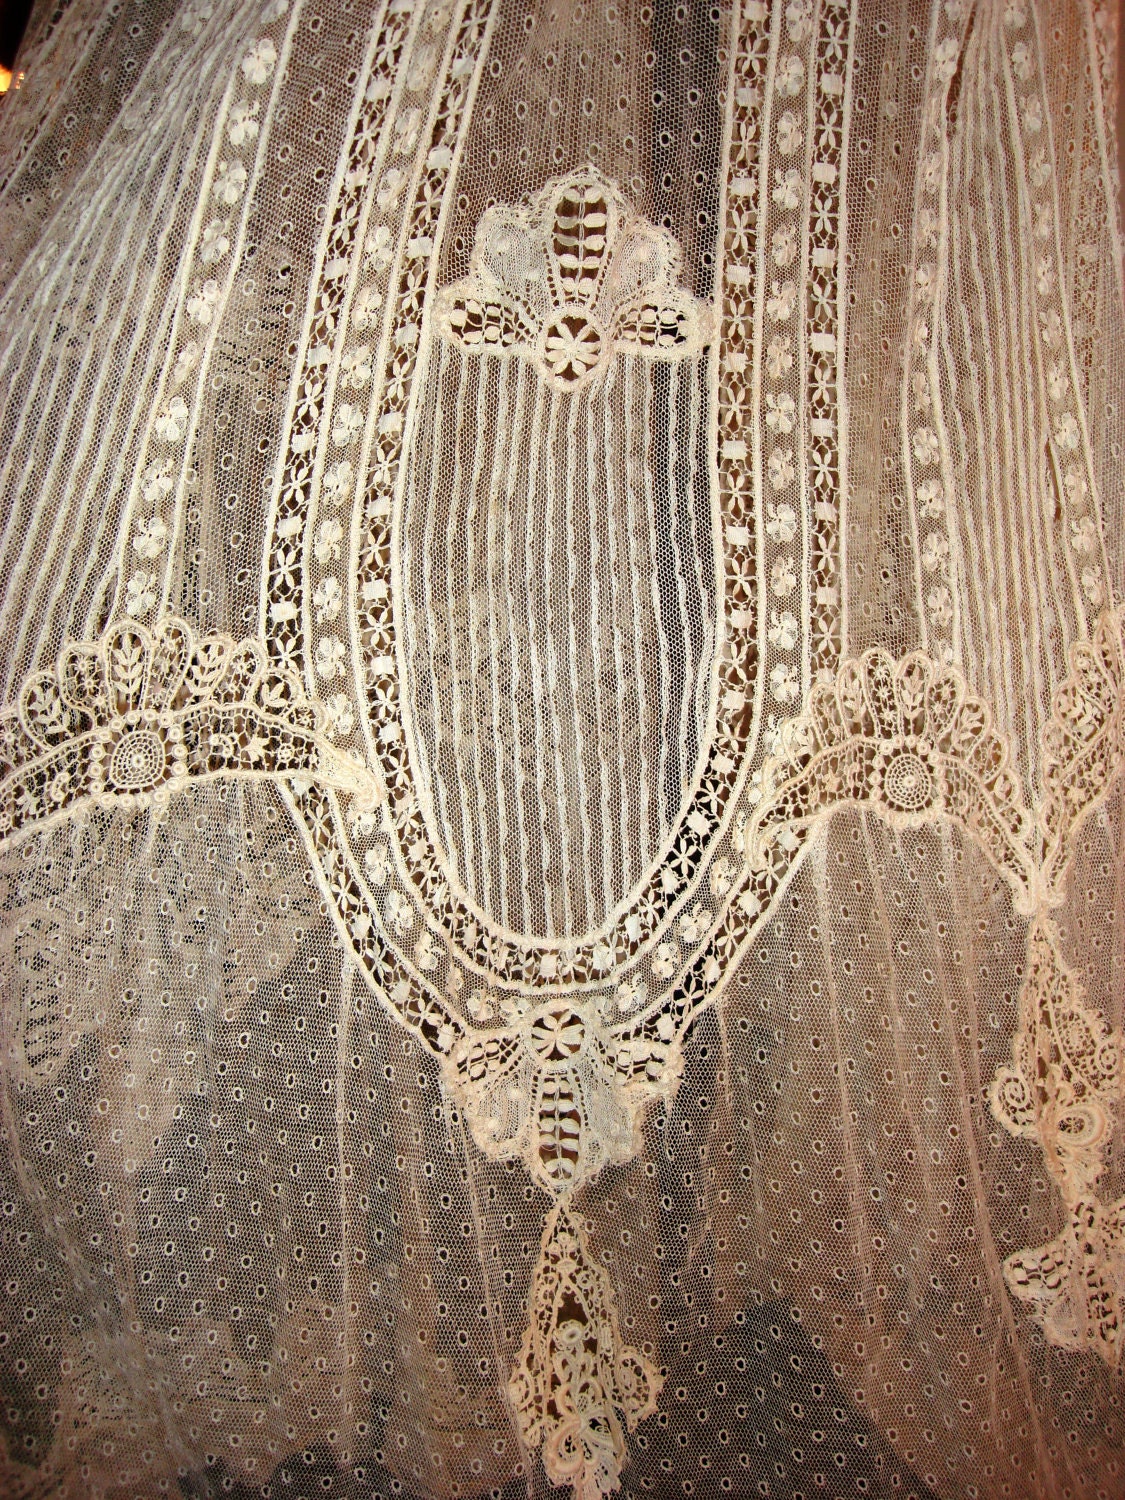 Circa 1930s handmade lace wedding skirtREDUCED